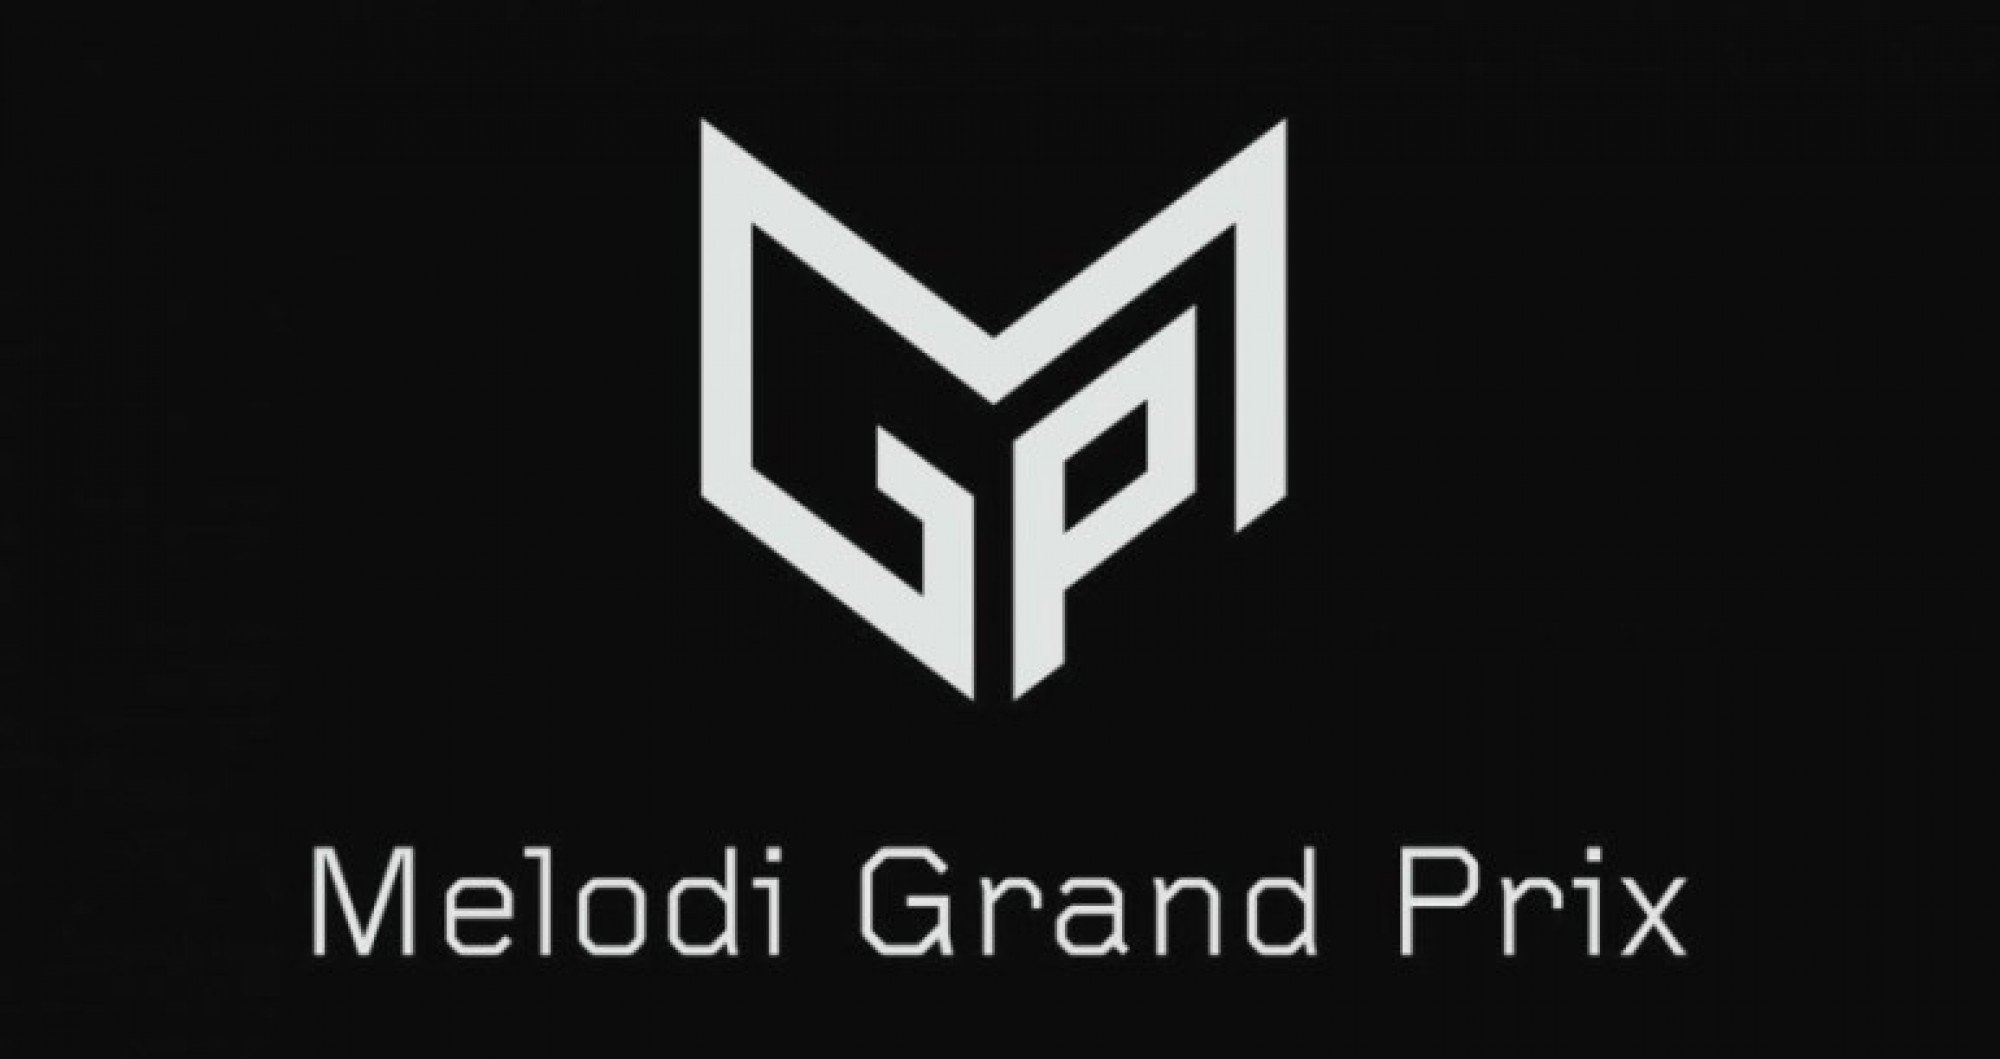 Melodi Grand Prix 🇳🇴 — Melodi Grand Prix 2019 cover artwork